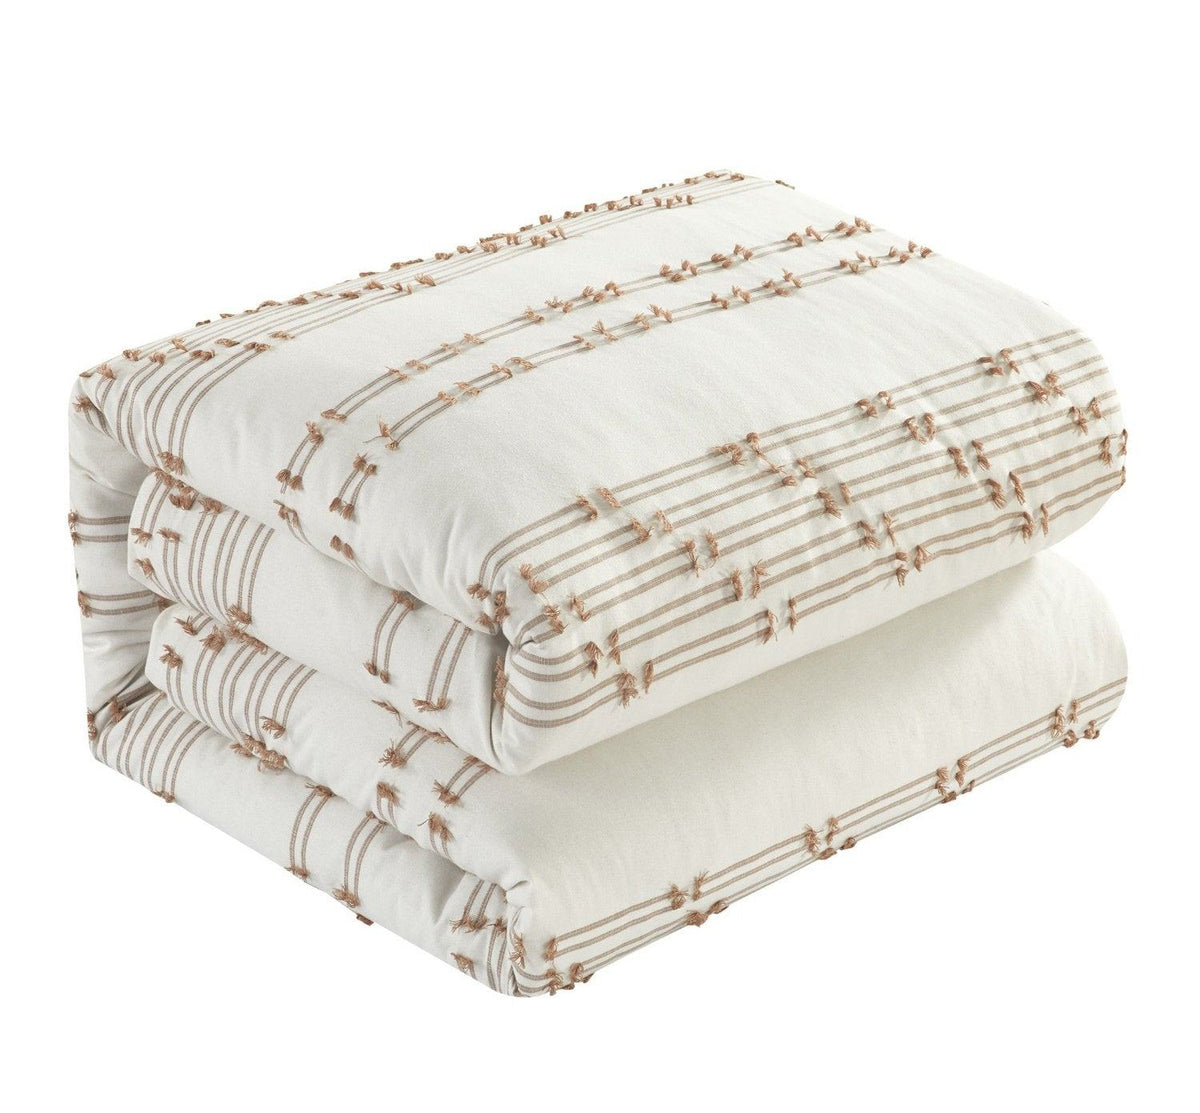 NY&C Home Desiree 9 Piece Cotton Jacquard Comforter 